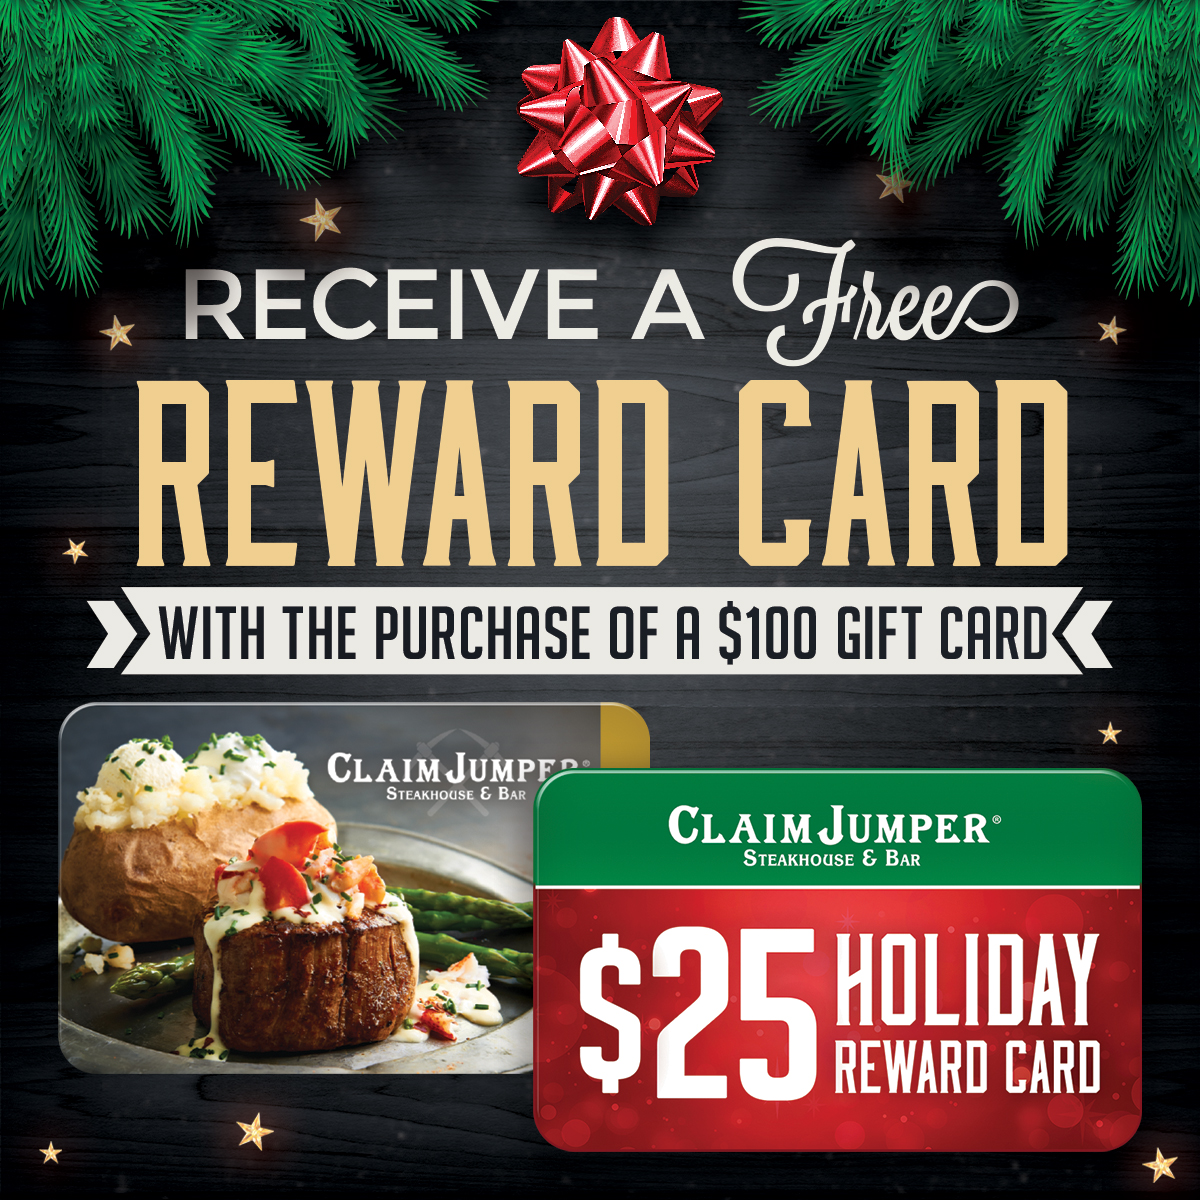 Claim Jumper Purchase $100 Gift card get $25 reward card